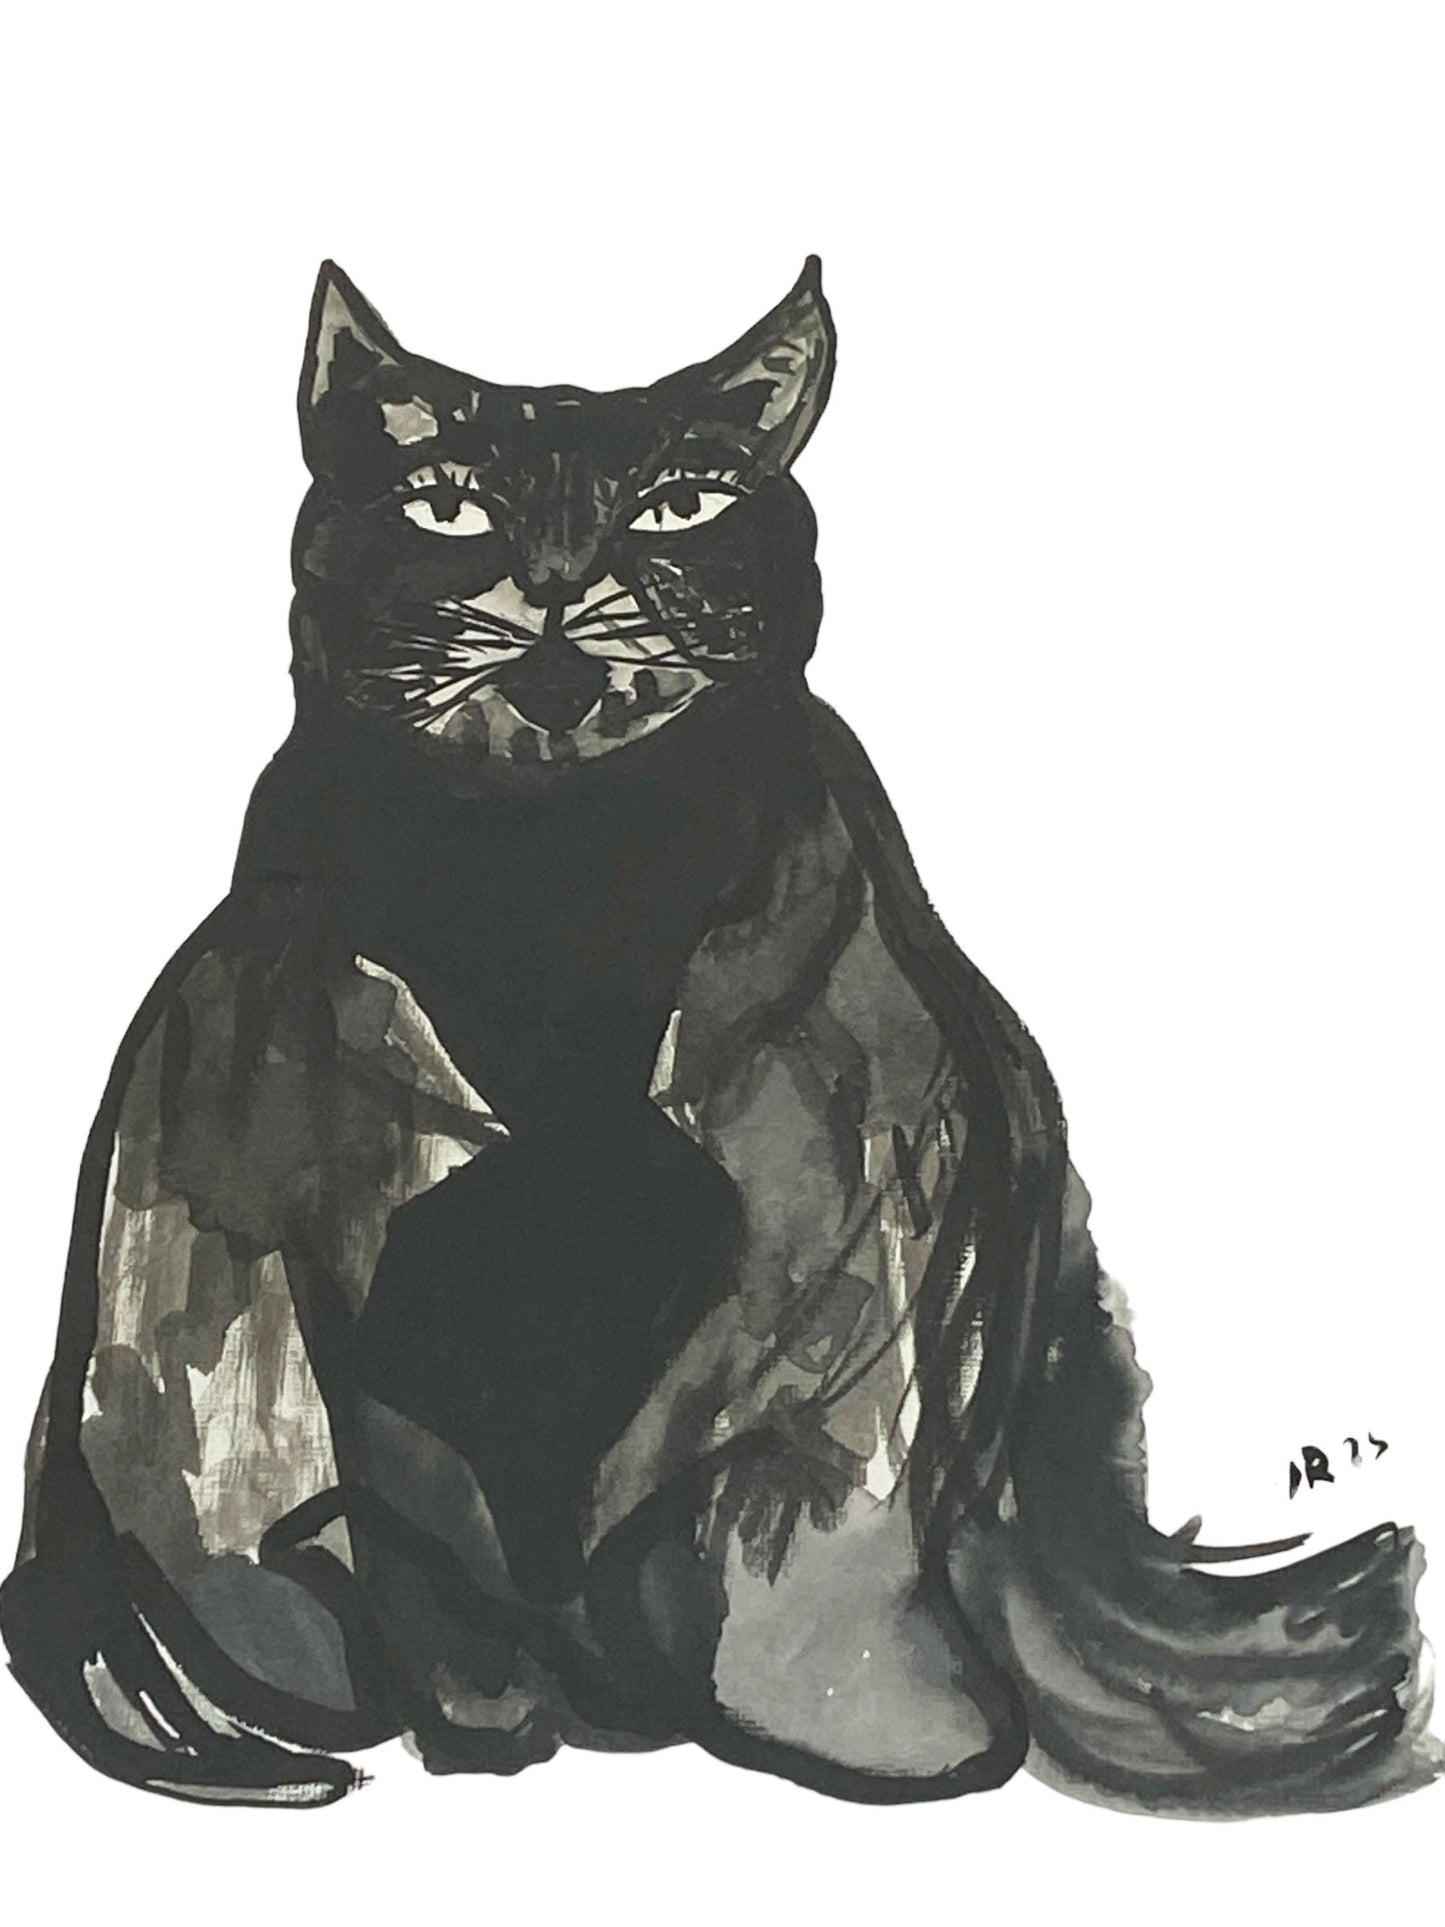 #7161. YJR Black Ink on Paper Painting Of A Cat "Minou", Framed 15" H